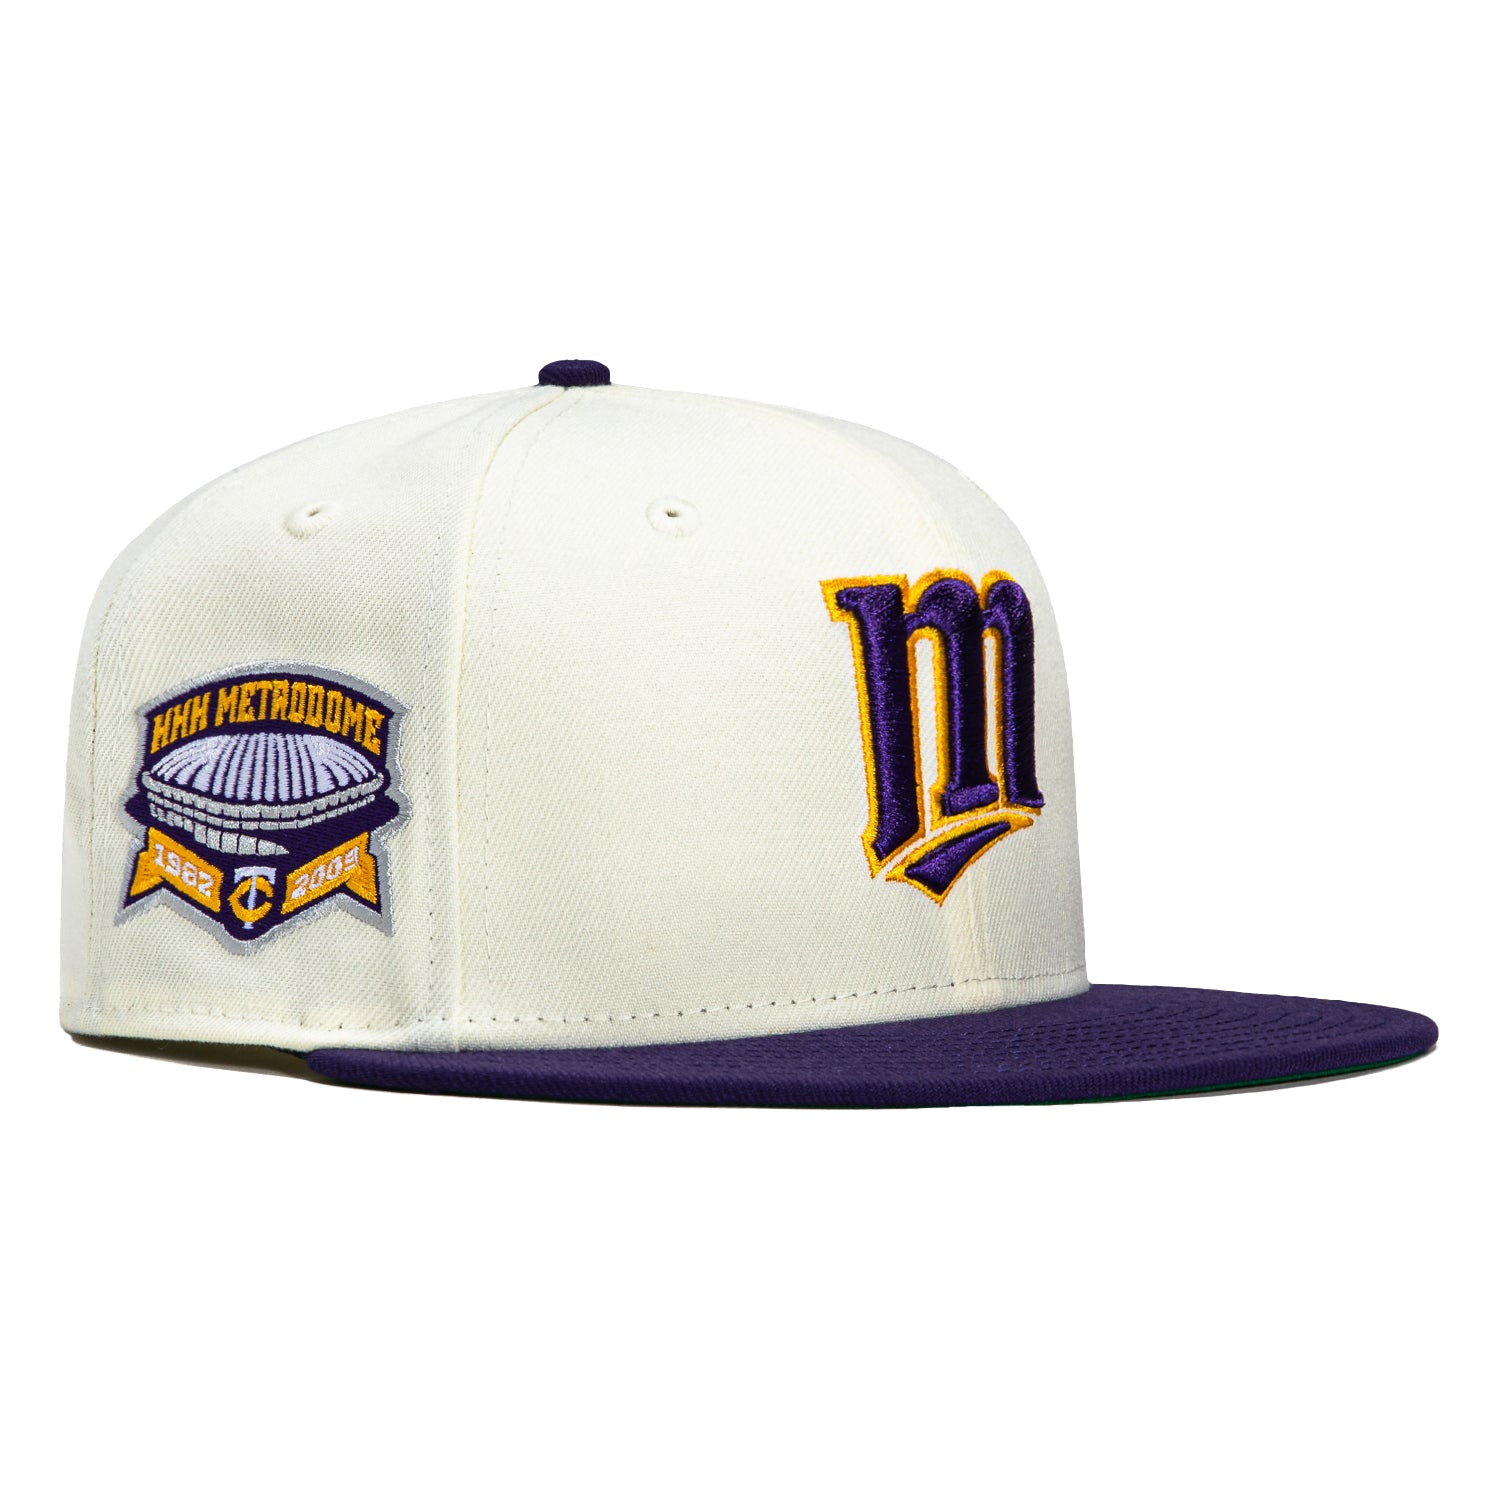 New Era 59Fifty Minnesota Twins Metrodome Patch Hat - White, Purple, G –  Hat Club